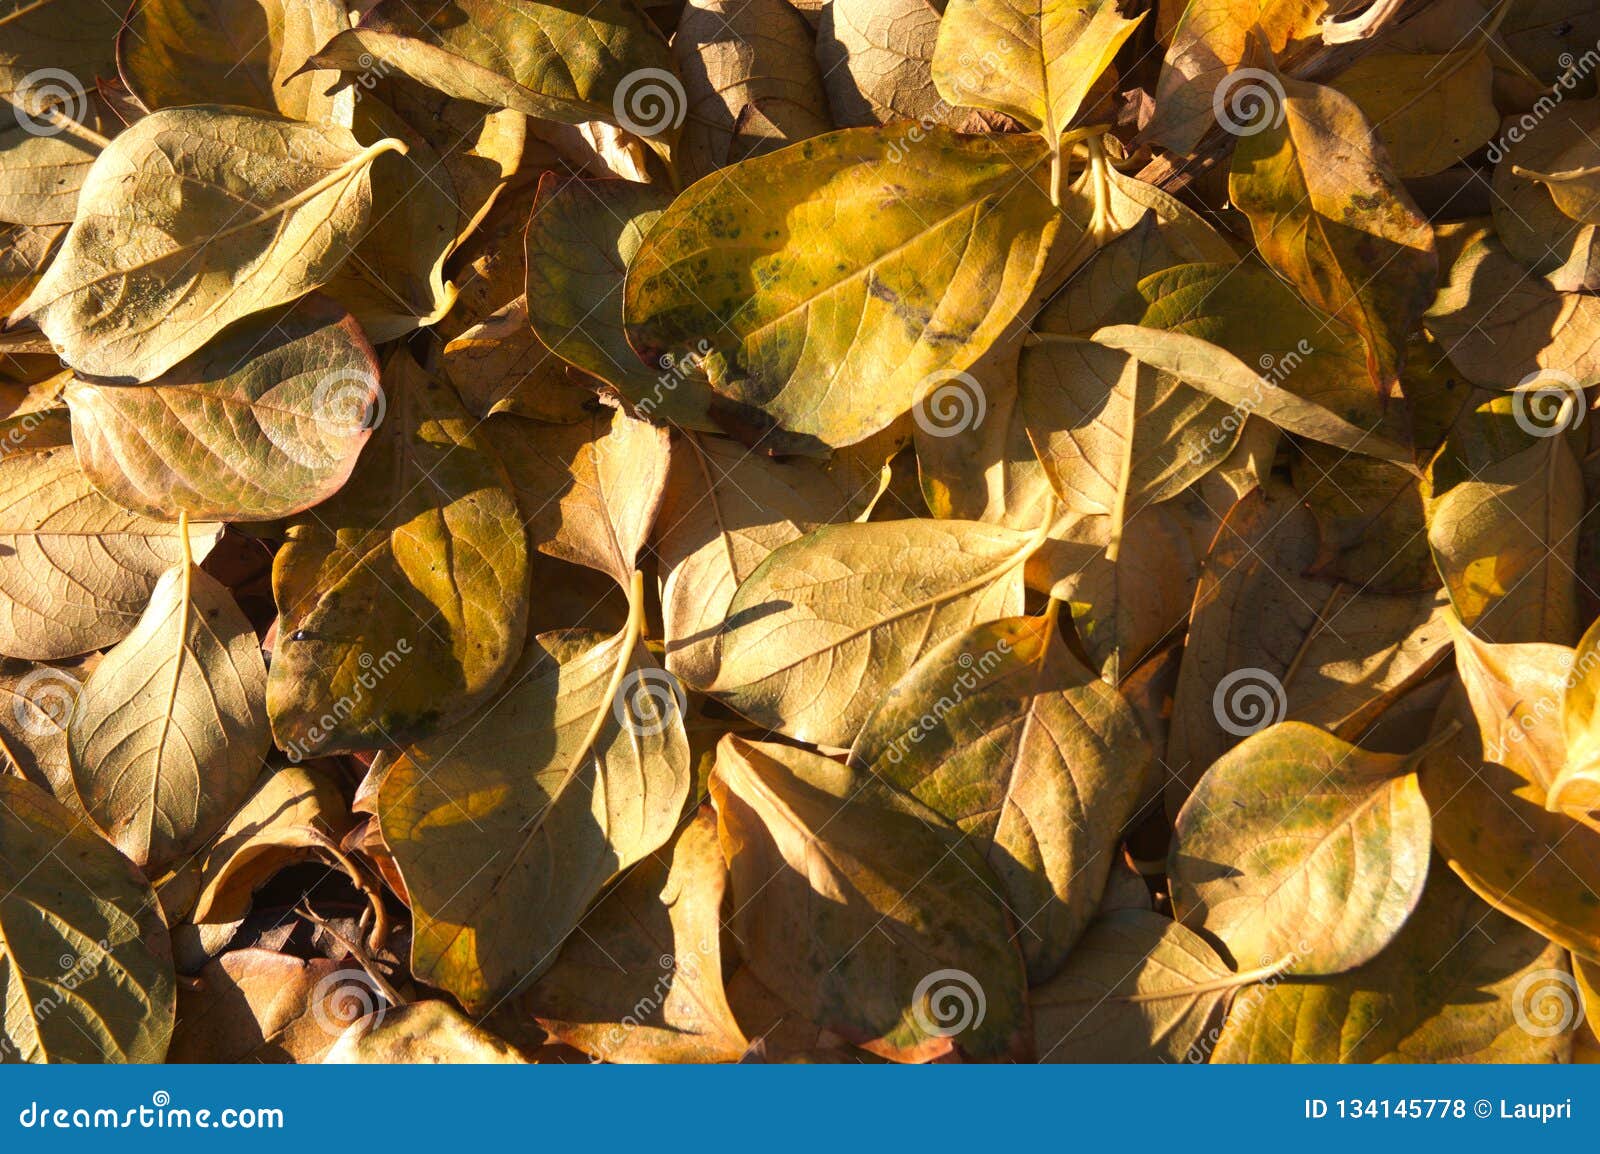 persimmon tree leaves fall, Pinellas Park FL